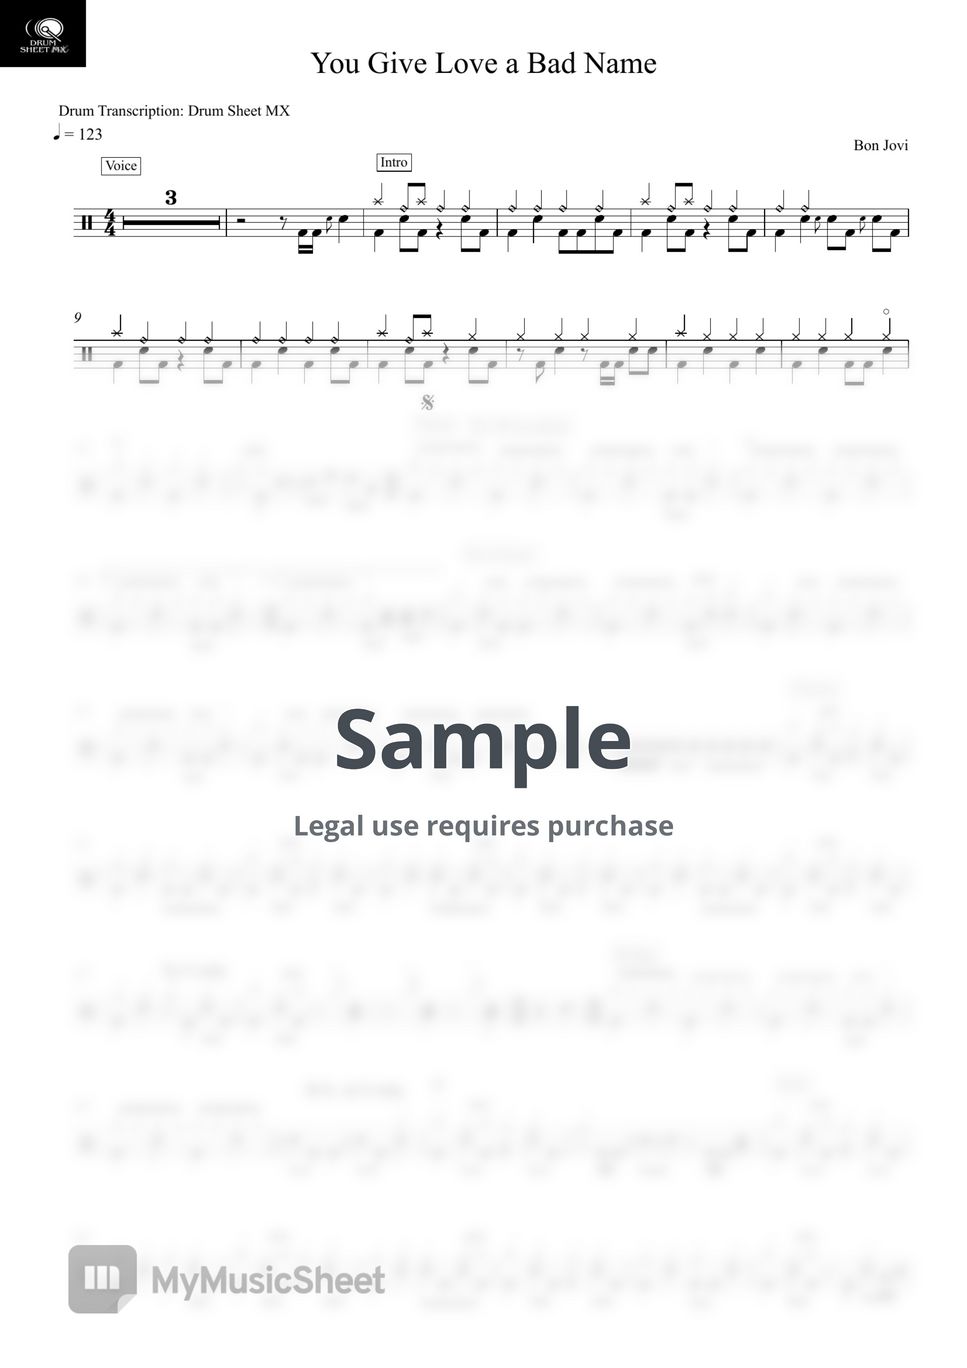 Bon Jovi - You Give Love a Band Name by Drum Transcription: Drum Sheet MX